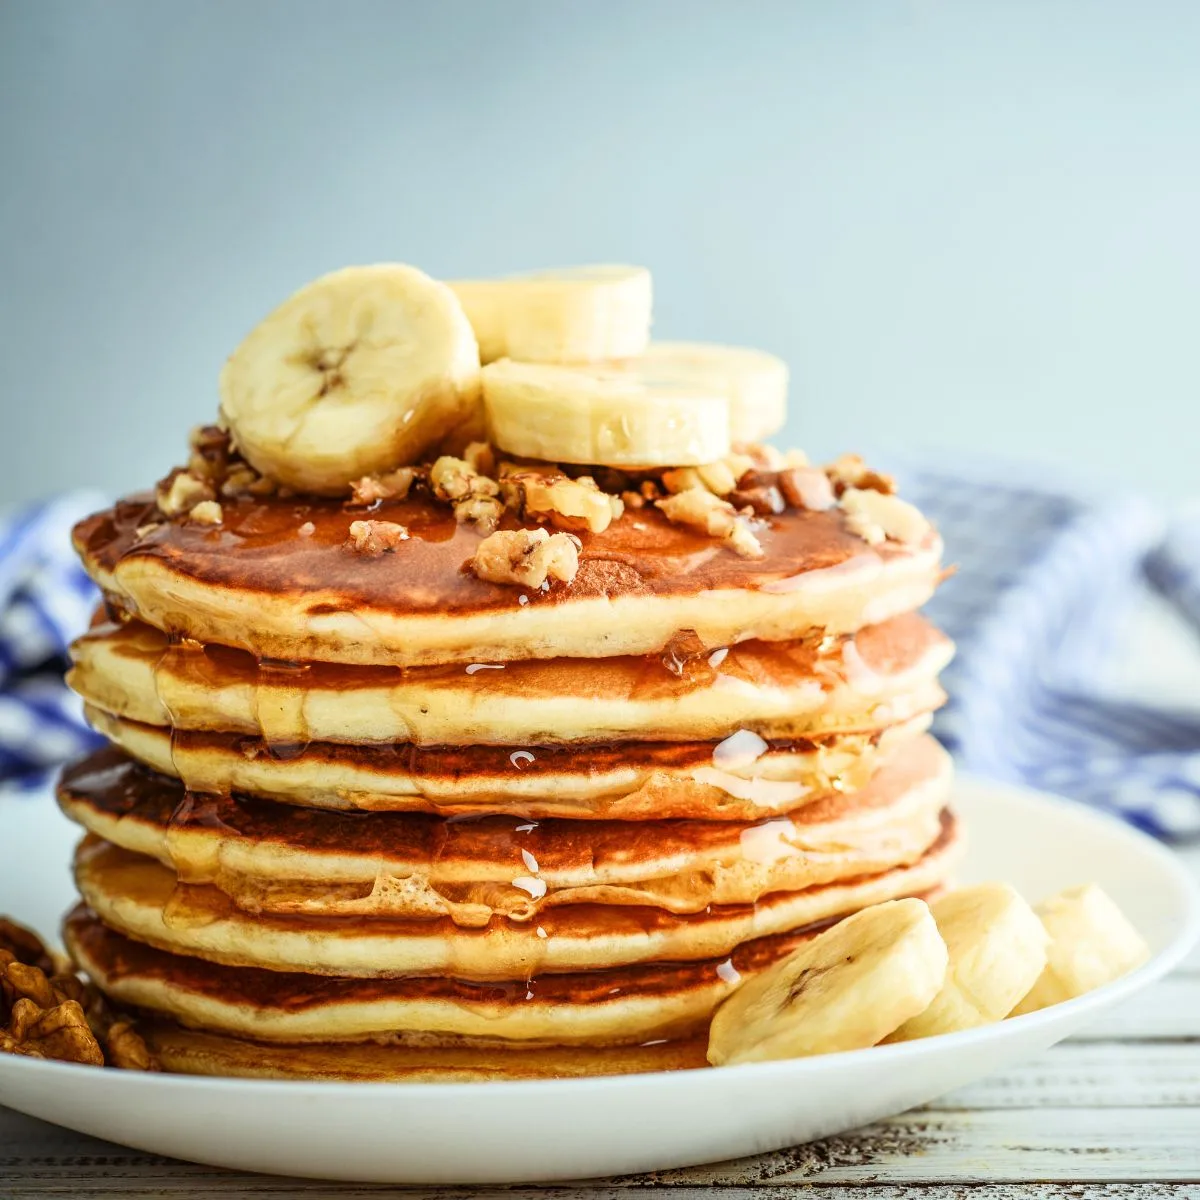 September 26 is National Pancake Day